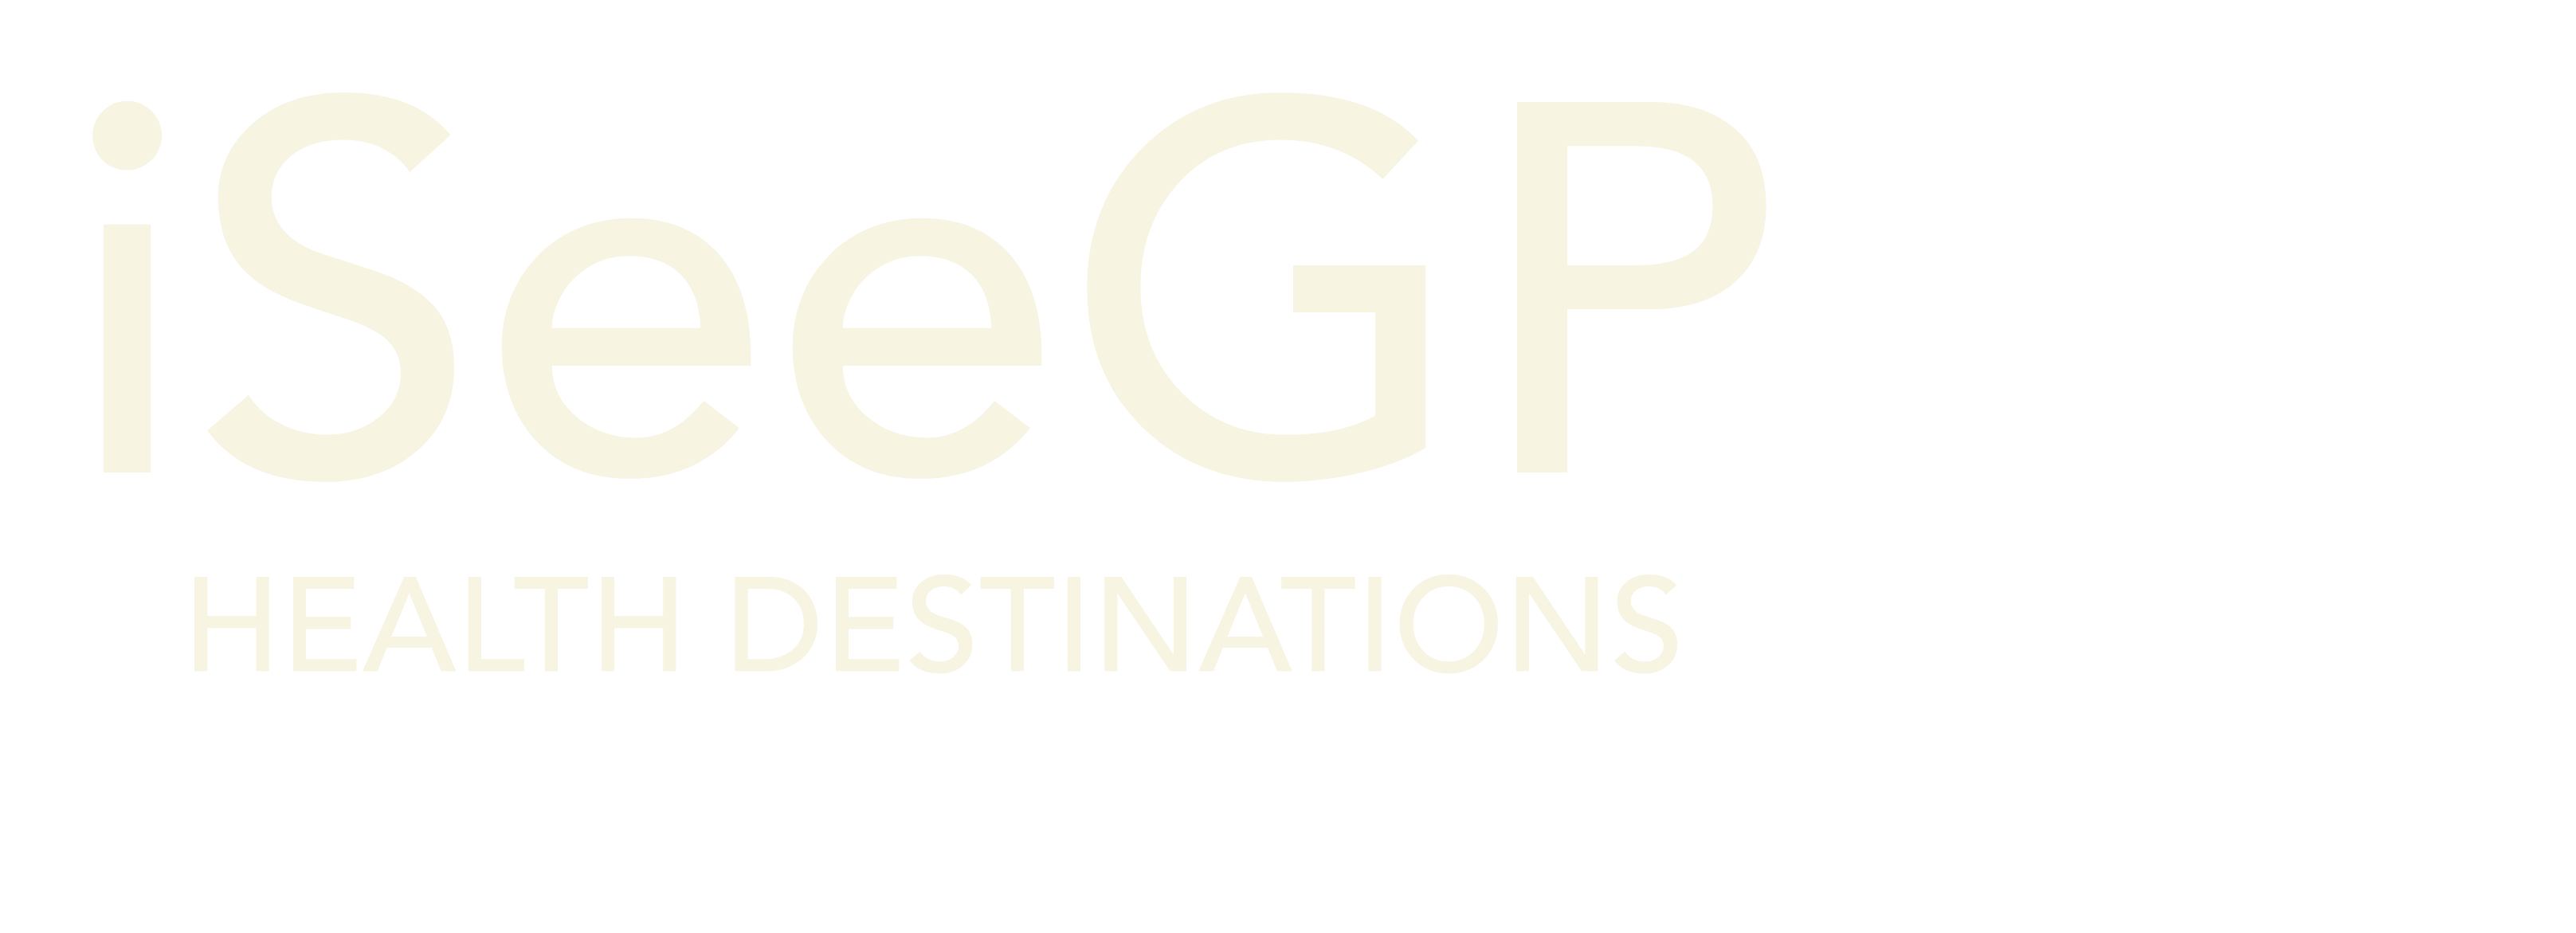 iSeeGP Logo